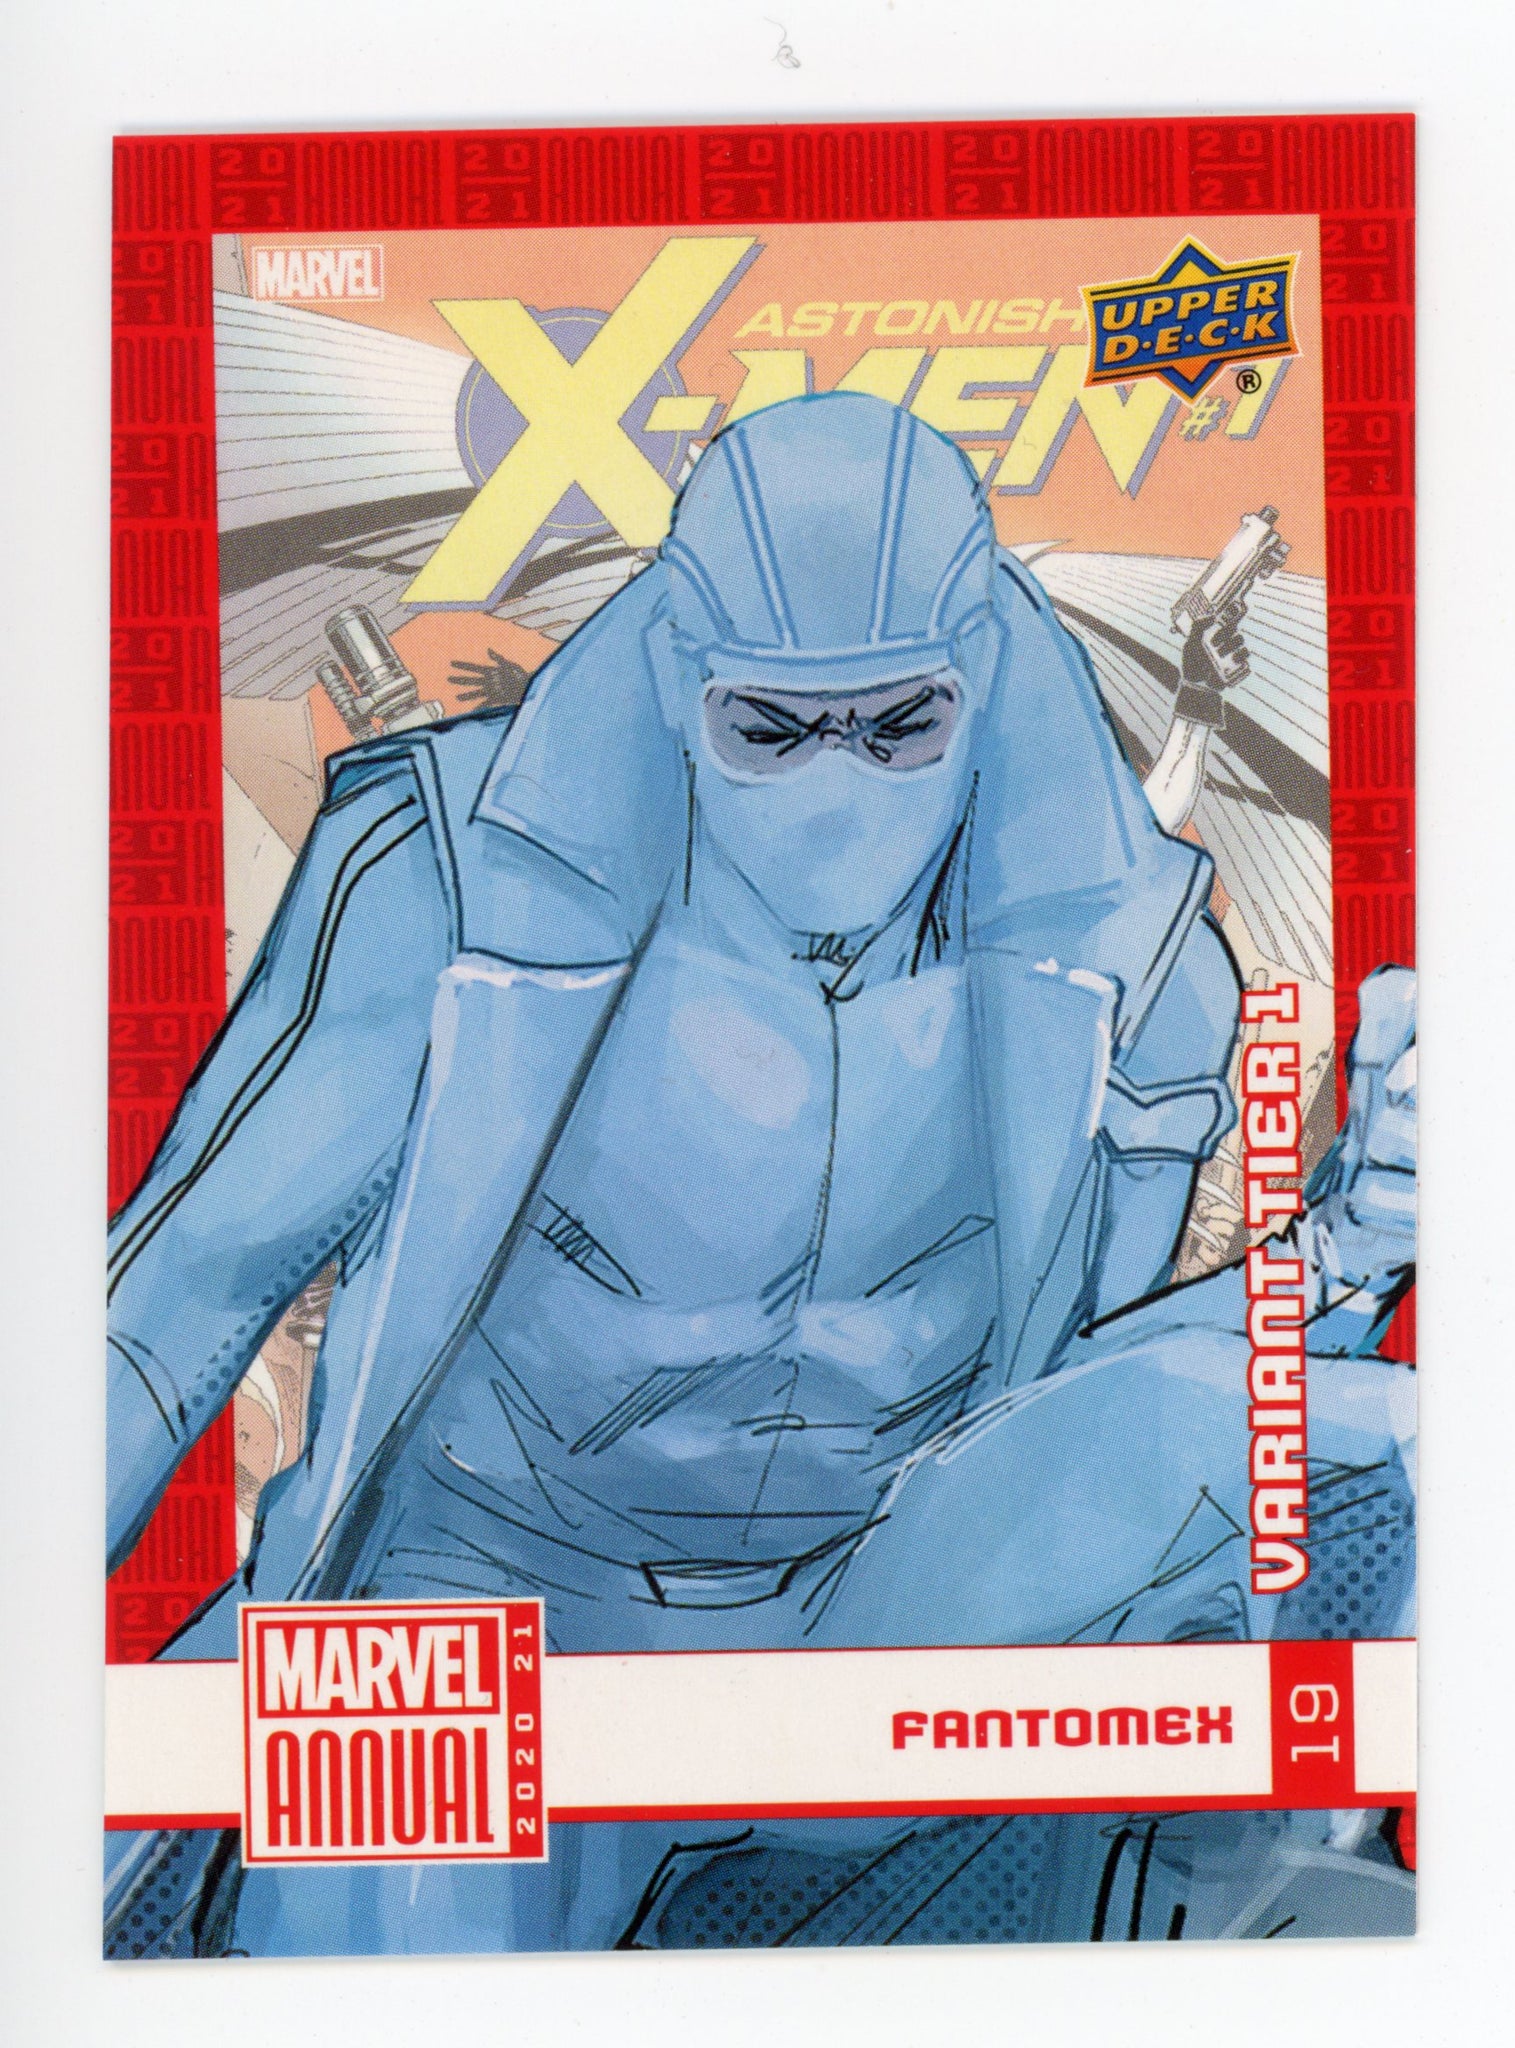 2020-2021 Fantomex Variant Tier 1 Upper Deck Marvel Annual # 19